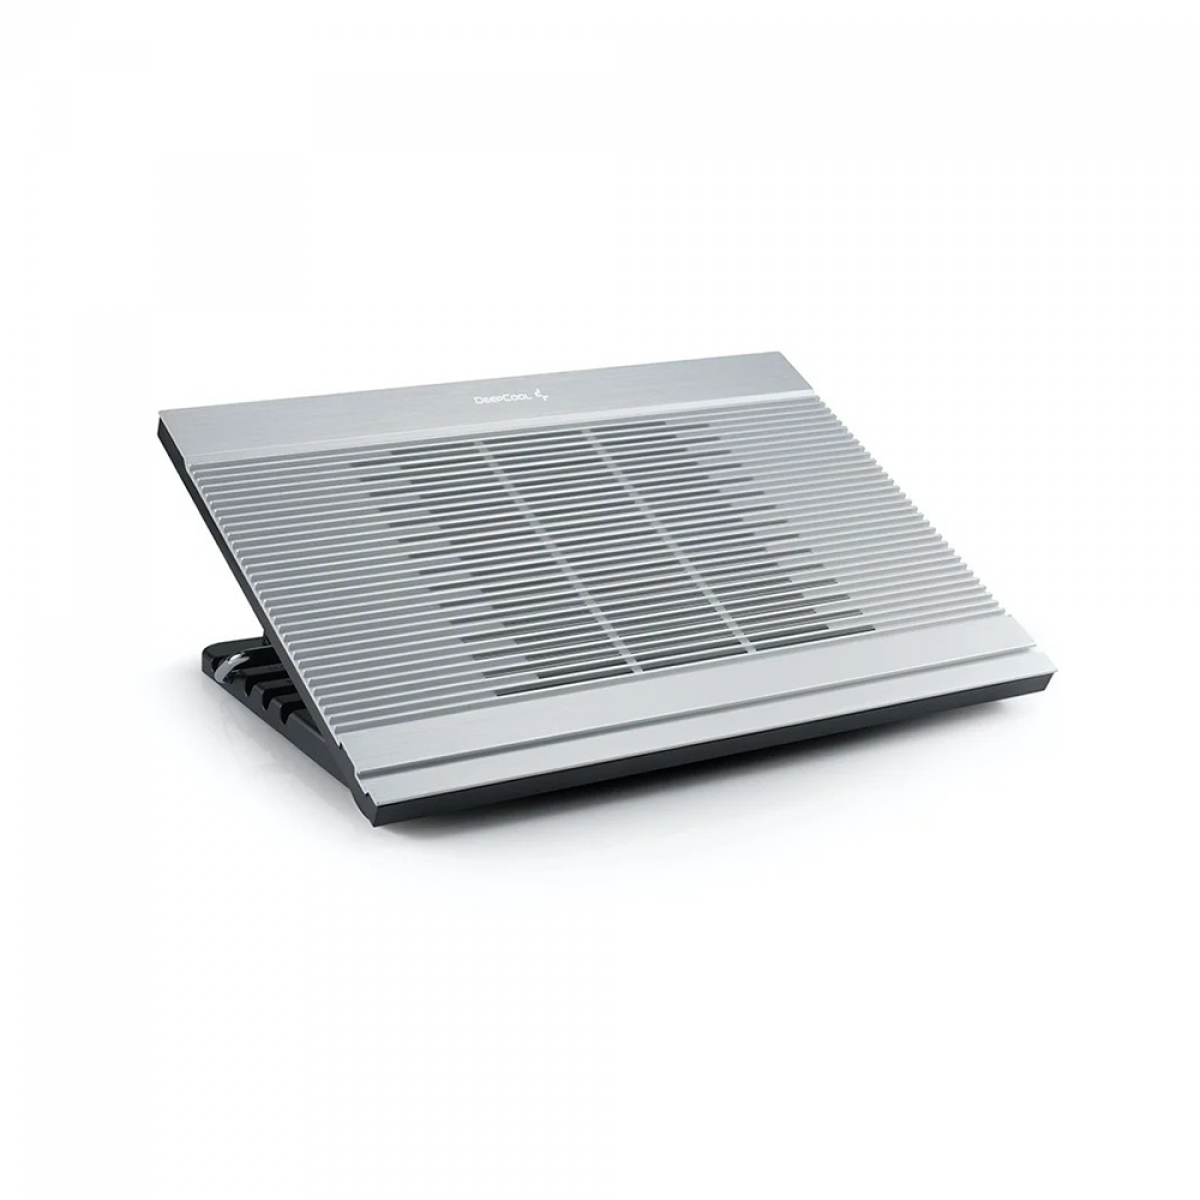 Suporte para Notebook DeepCool N9, Ajustável, Com 1 Fan, DP-N136-N9SR